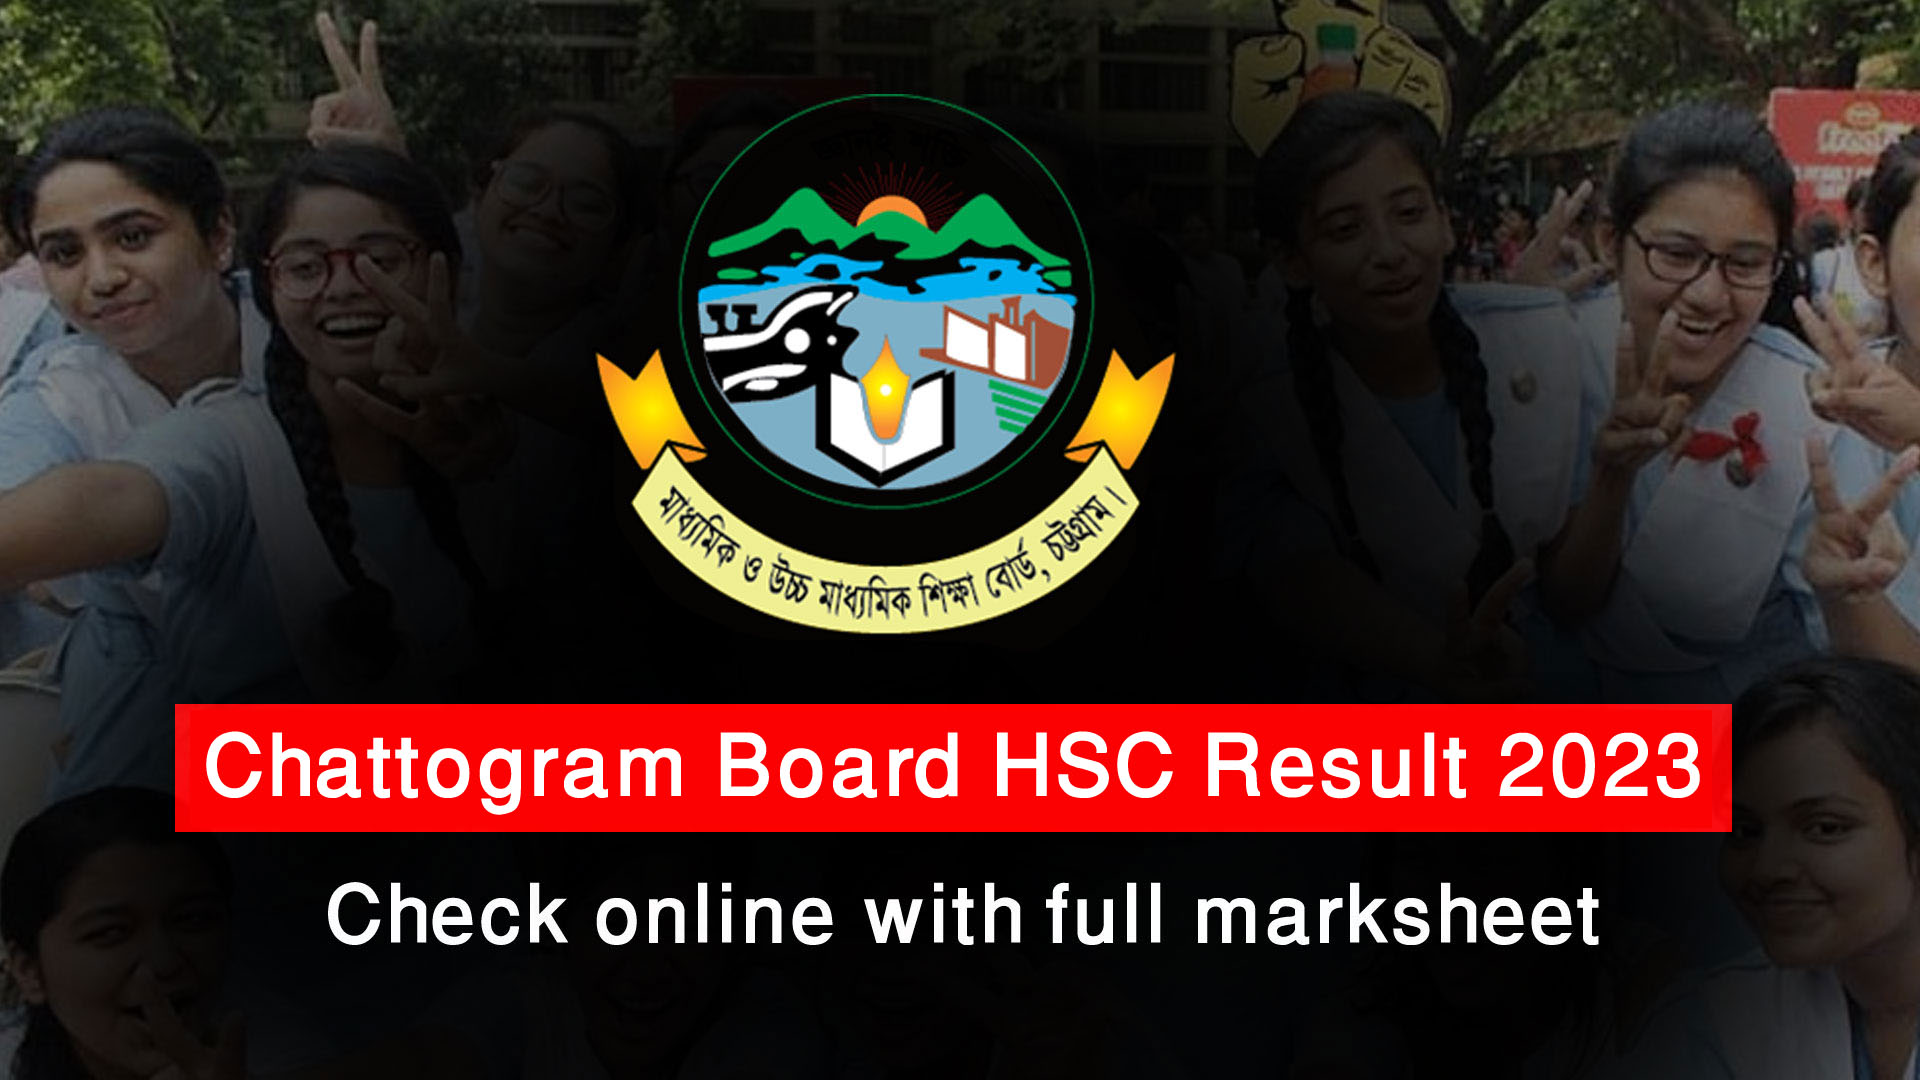 Chattogram Board HSC Result 2023